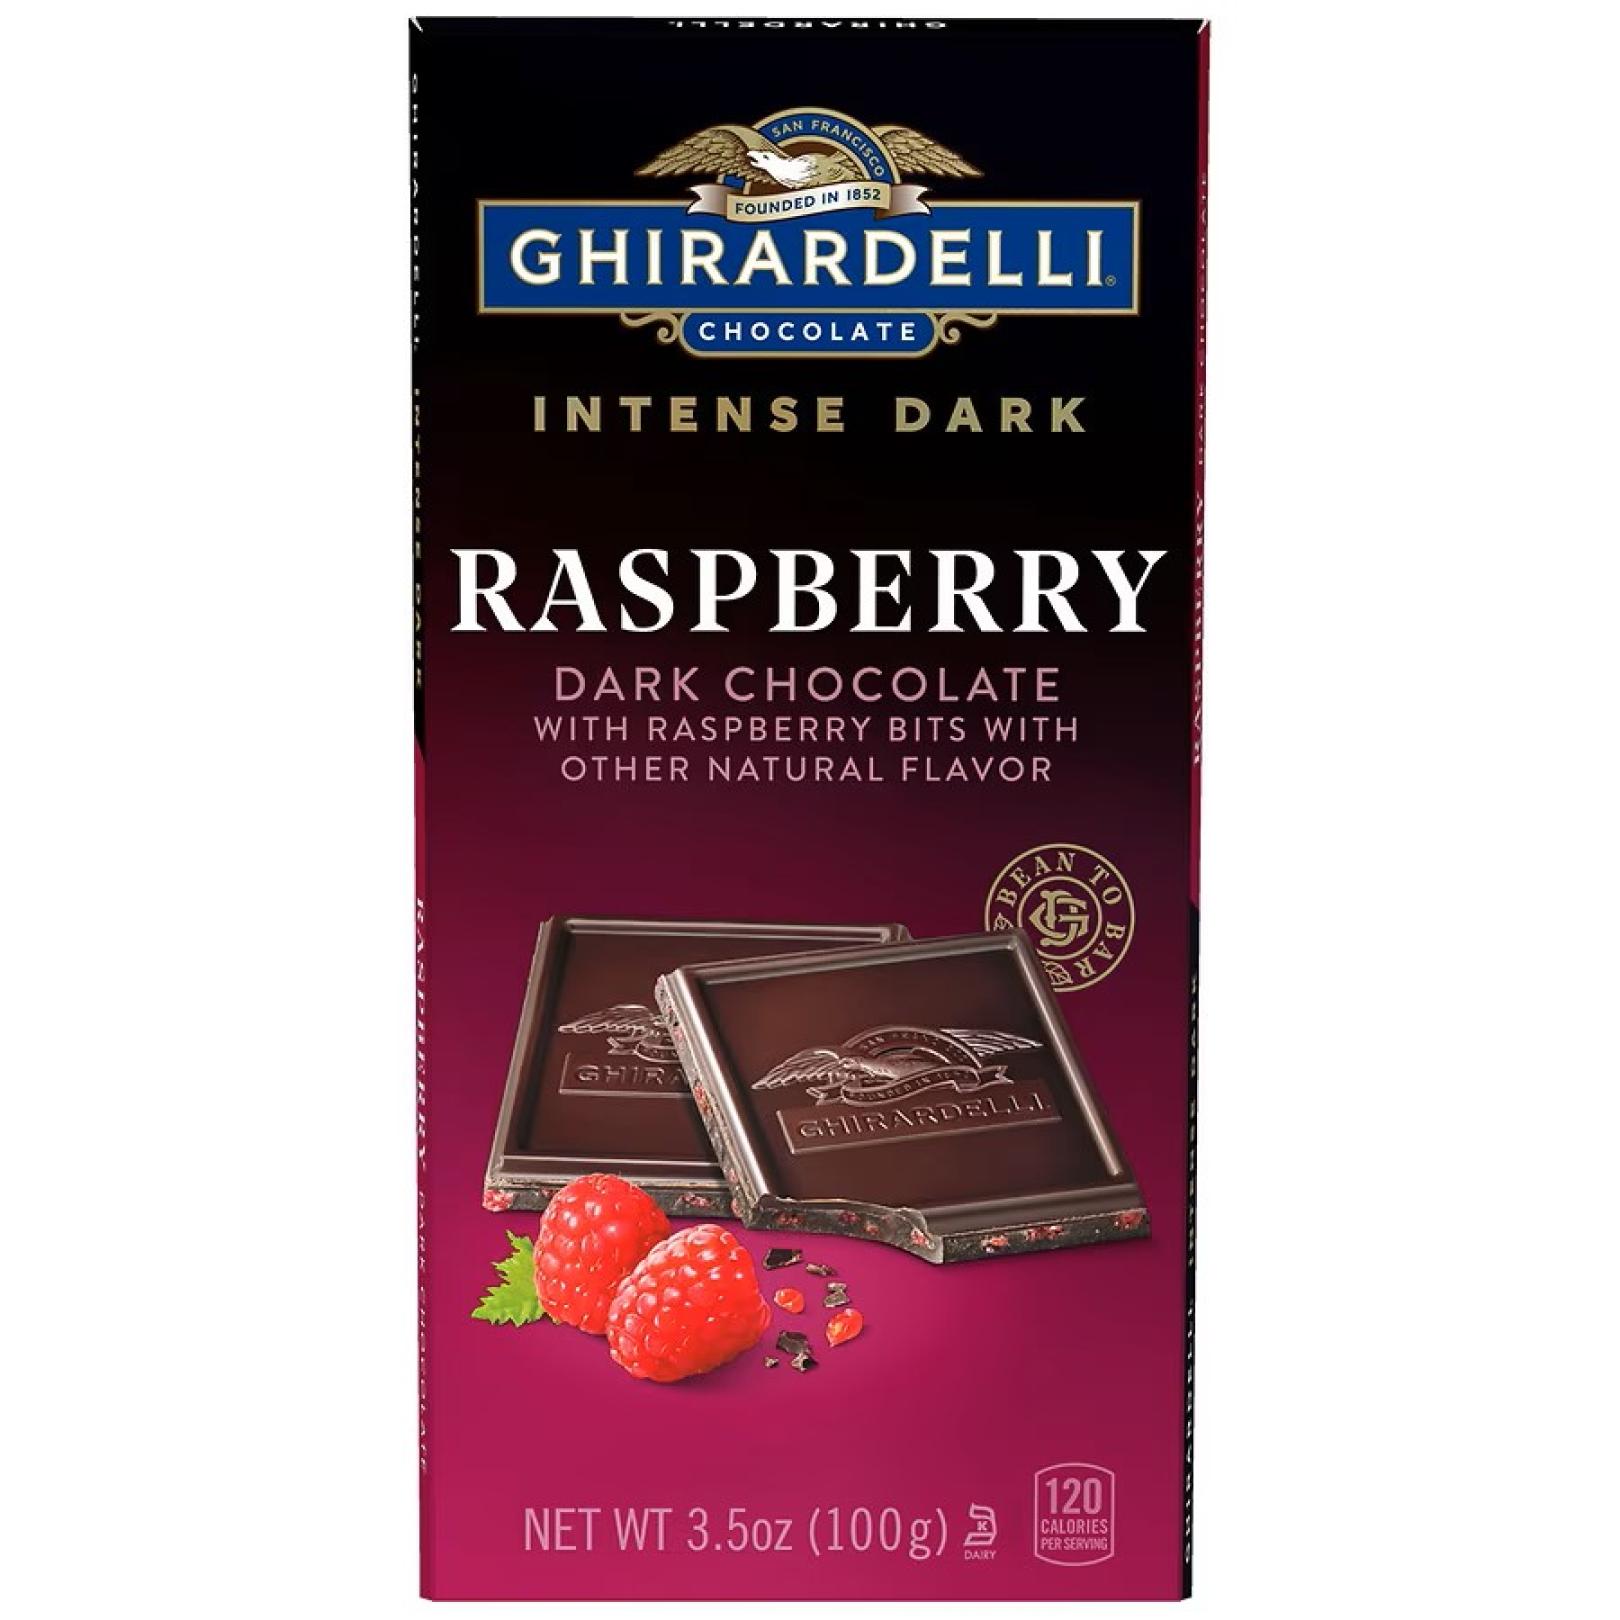 Ghirardelli Intense Dark Raspberry chocolate